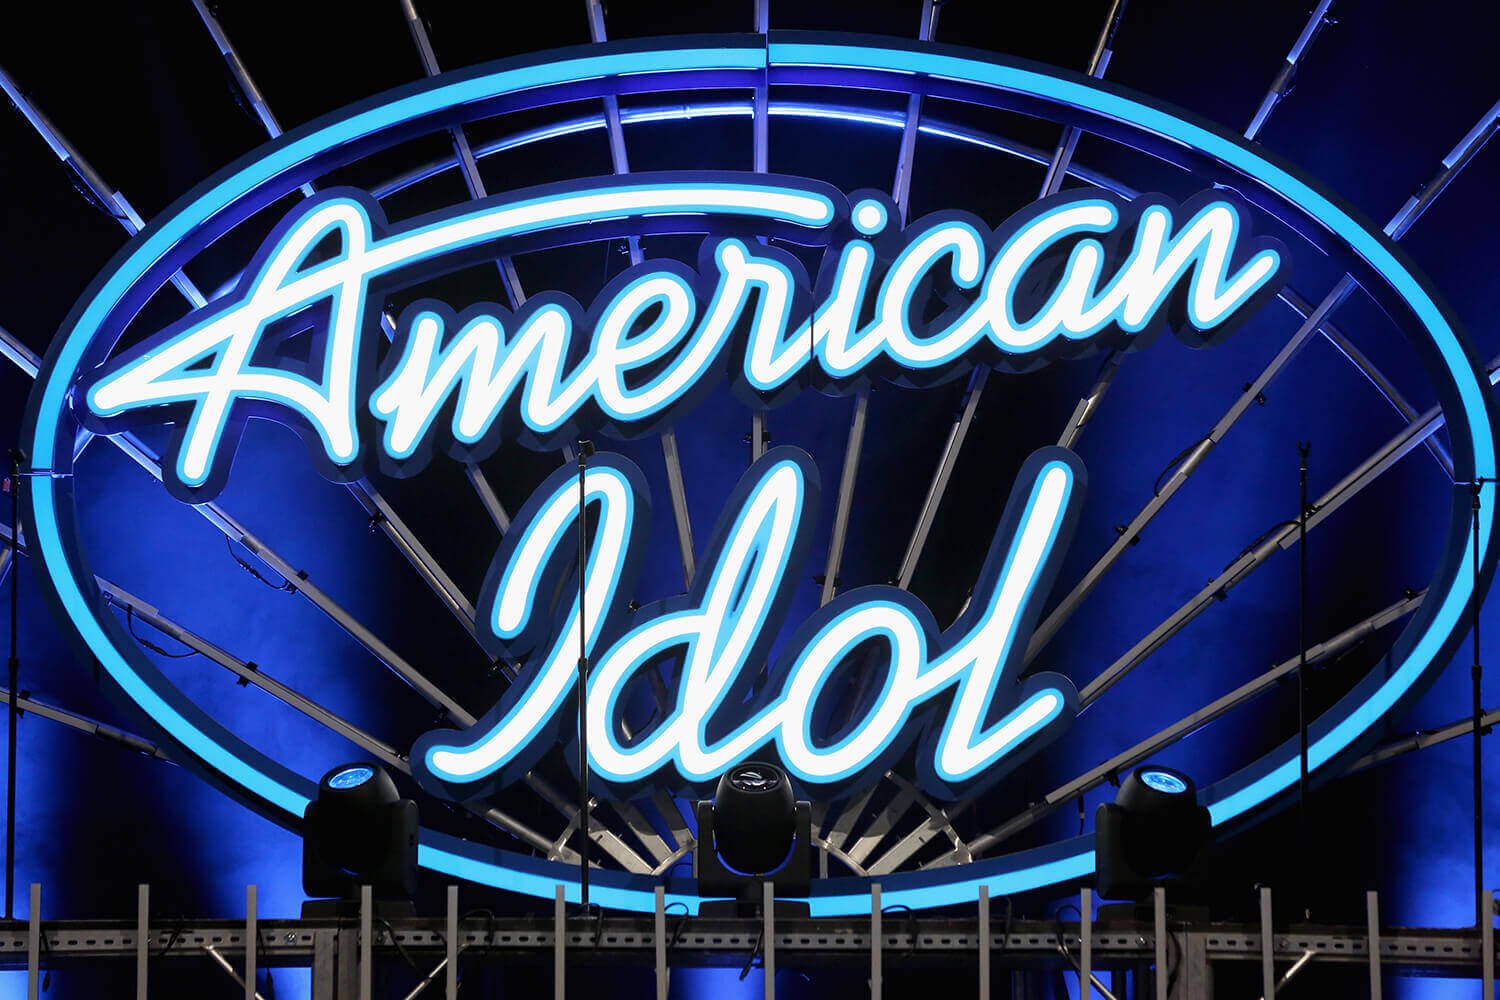 The American Idol logo in blue neon lights